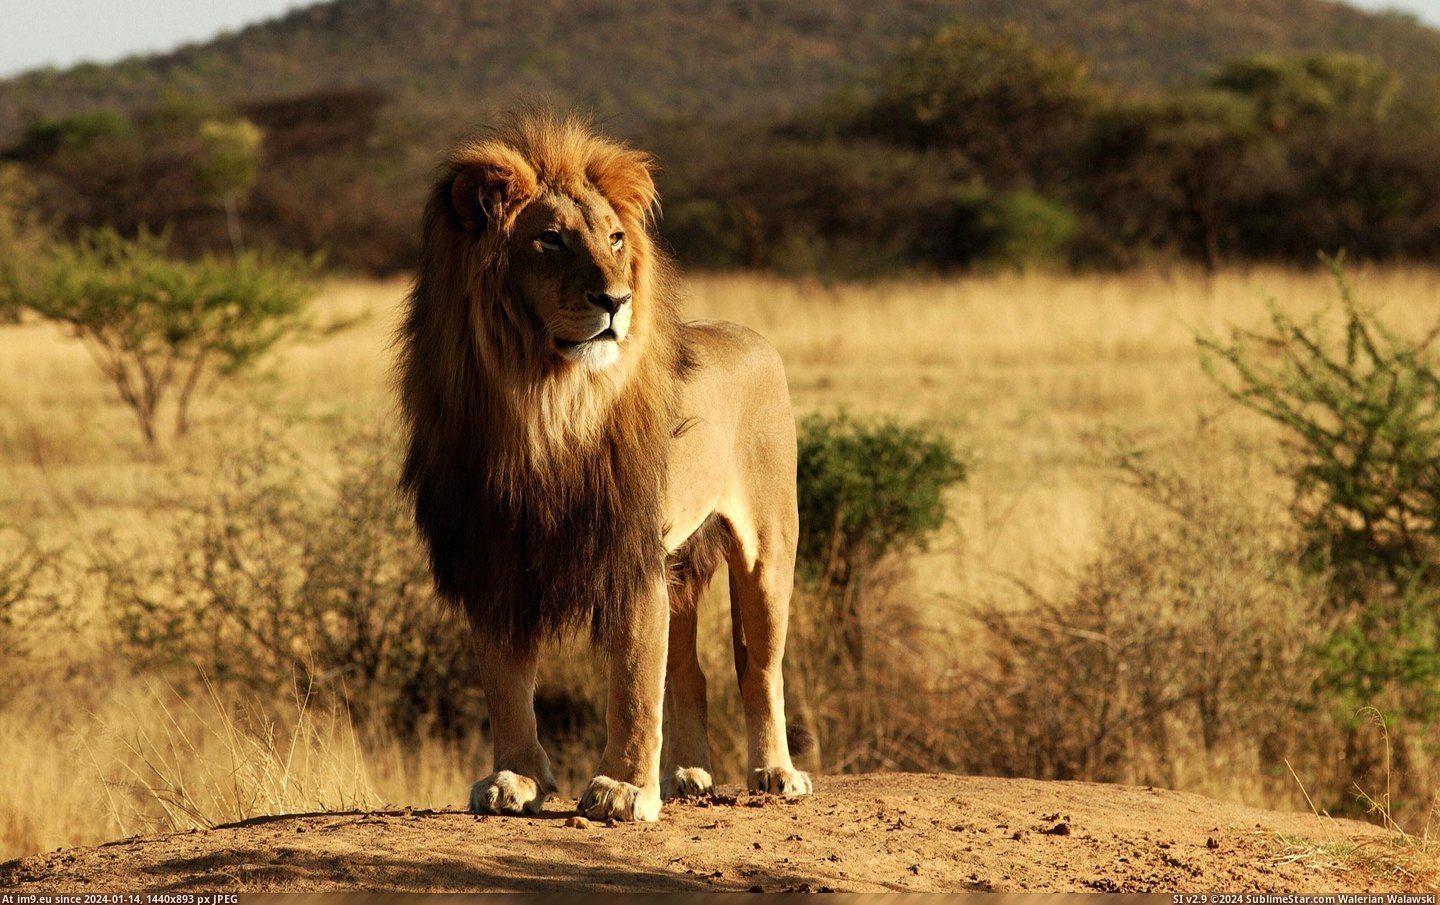 #Wallpaper #Beautiful #Lion #Wide #King King Lion Wide HD Wallpaper Pic. (Bild von album Unique HD Wallpapers))